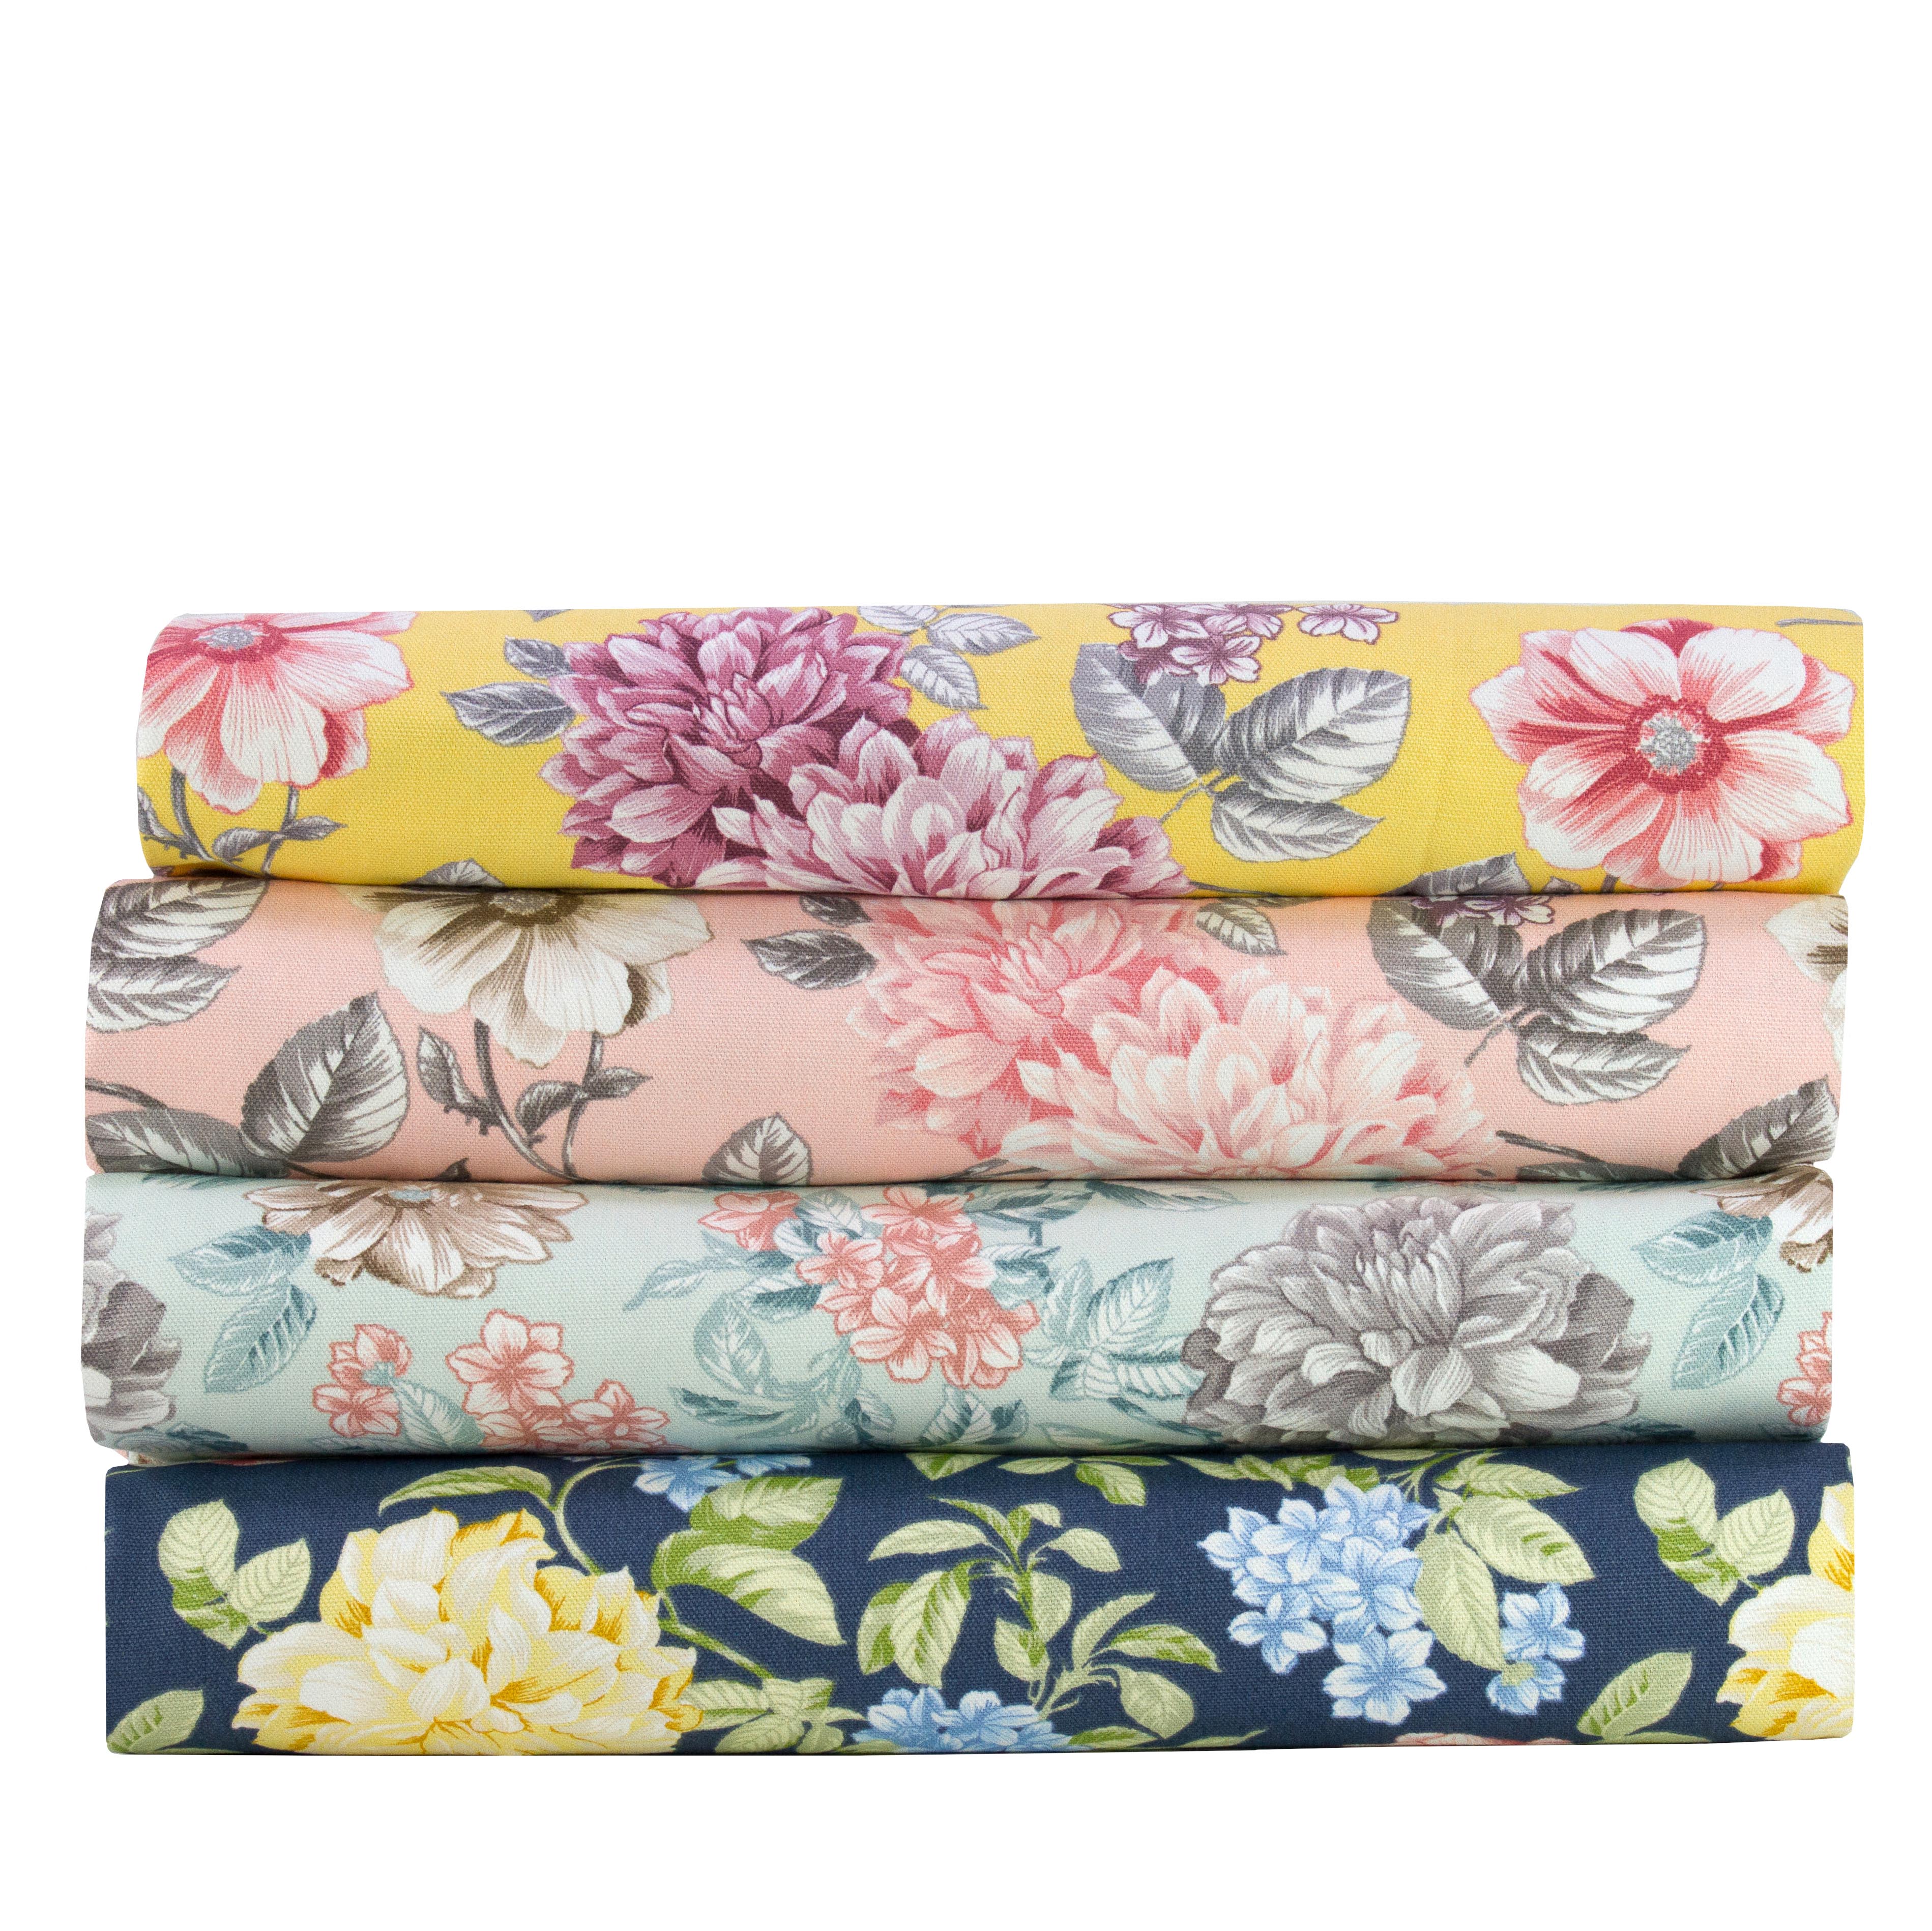 Better Homes & Gardens 100% Cotton Flower Garden Blush, 2 Yard Precut Fabric - image 4 of 6